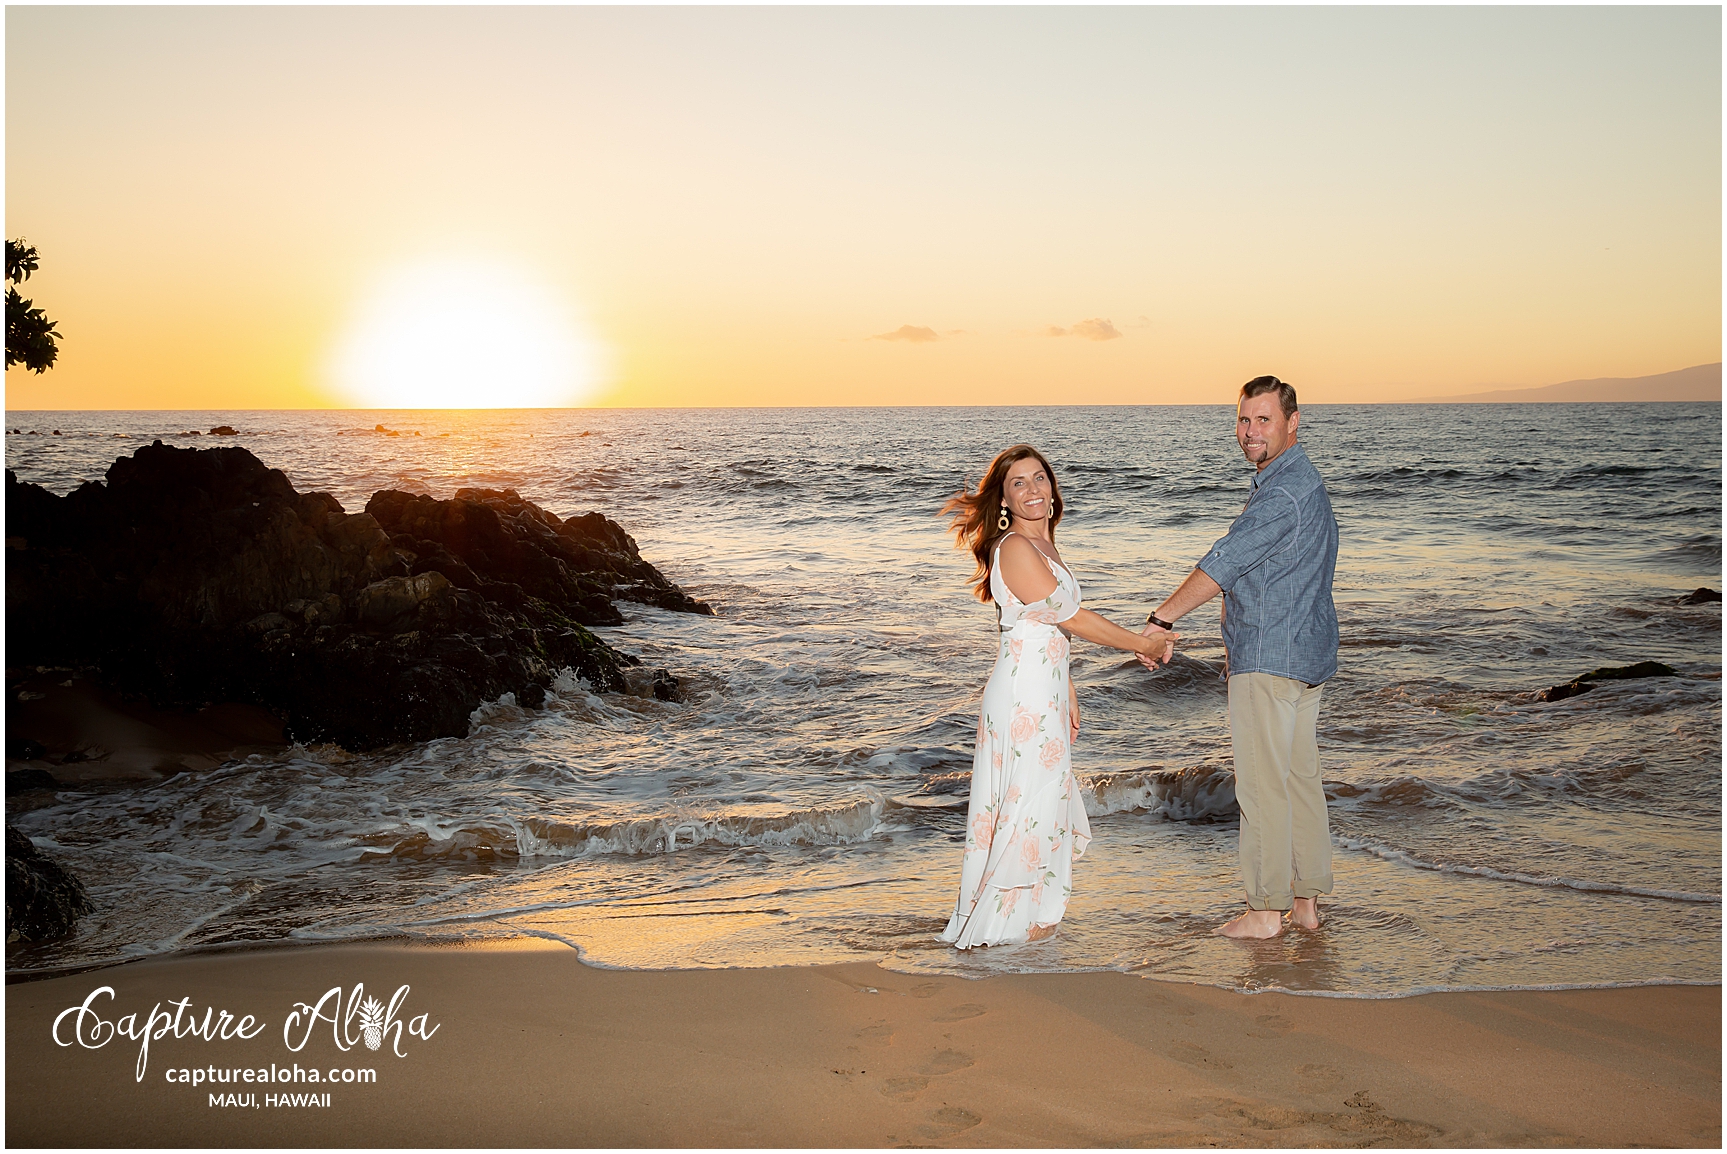 Maui Couples Photography at Mokapu Beach, Maui at sunset